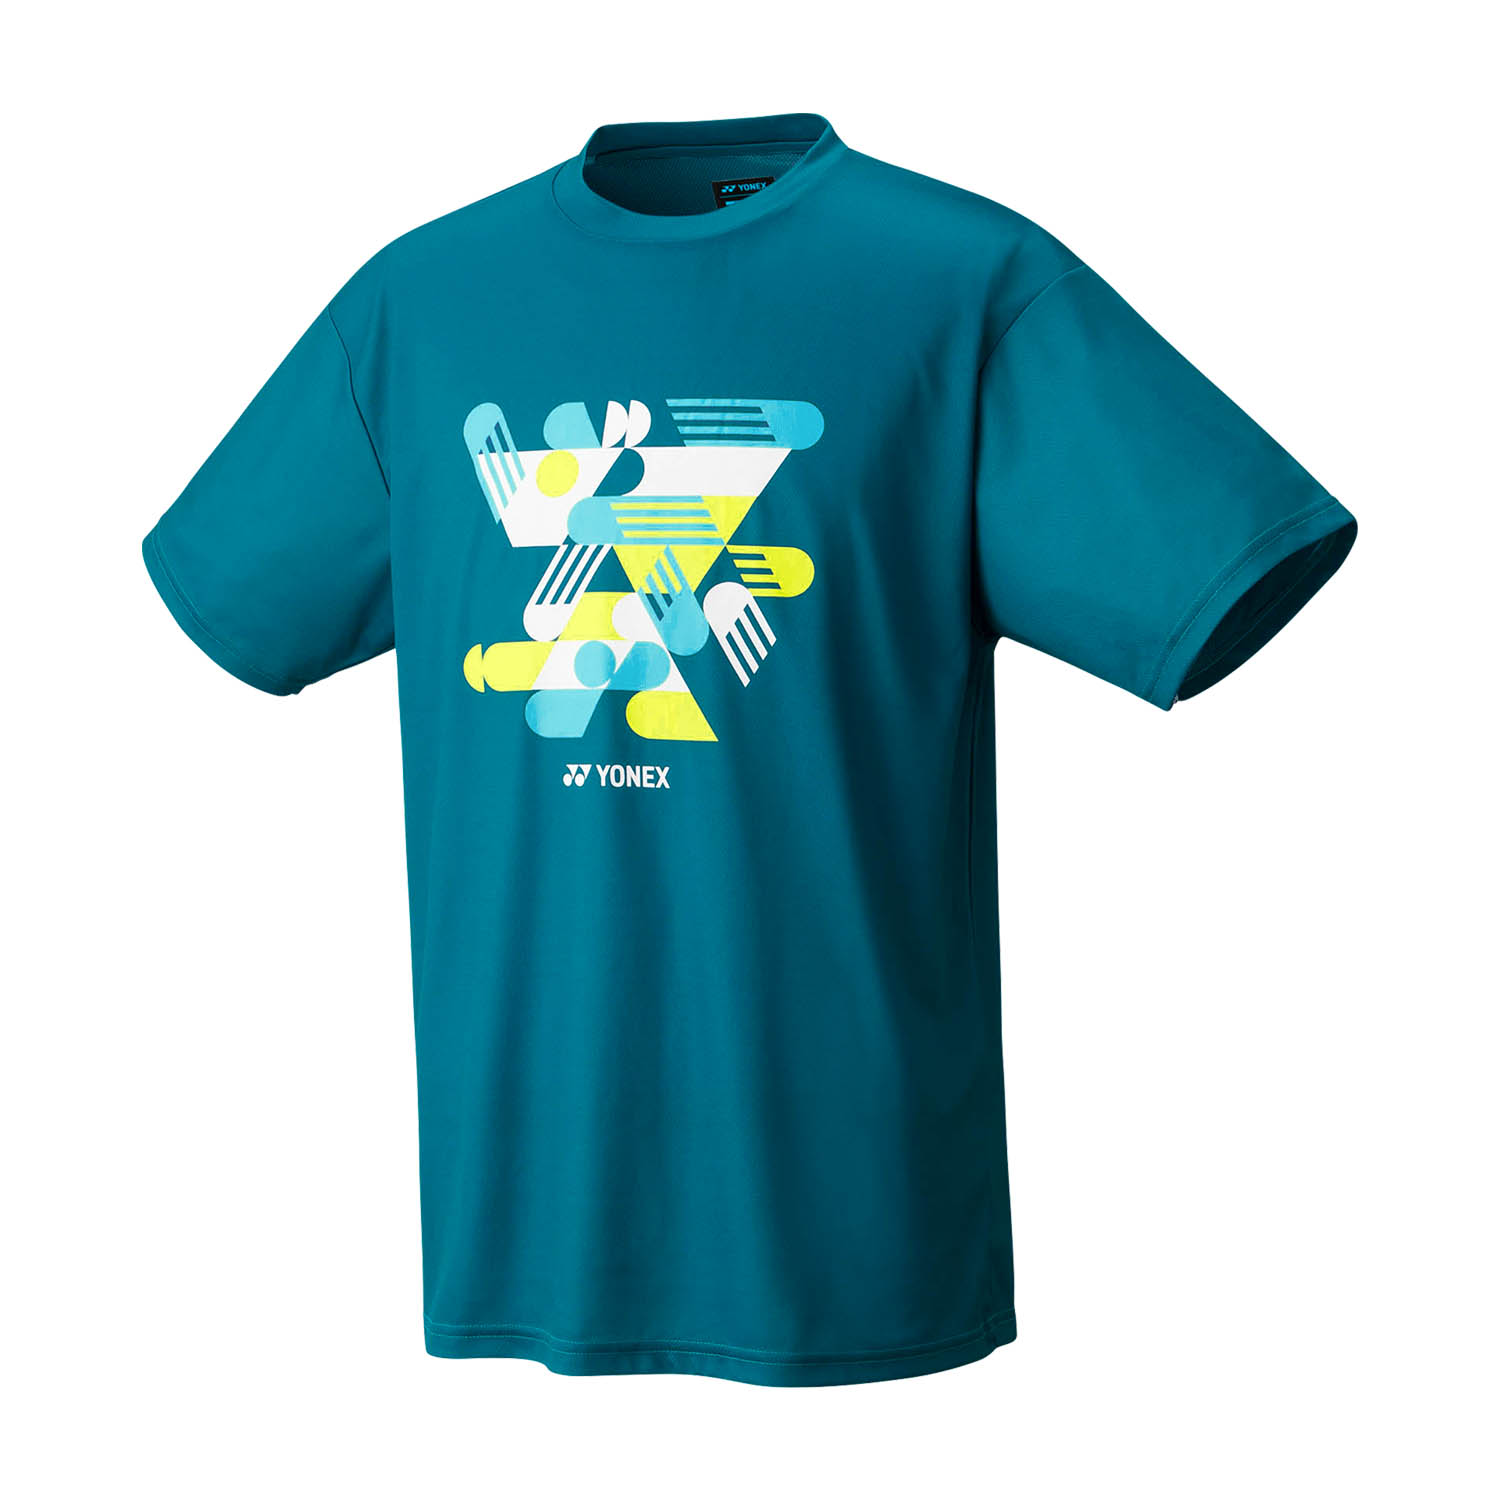 Yonex Practice Pro Camiseta Niños - Blue Green